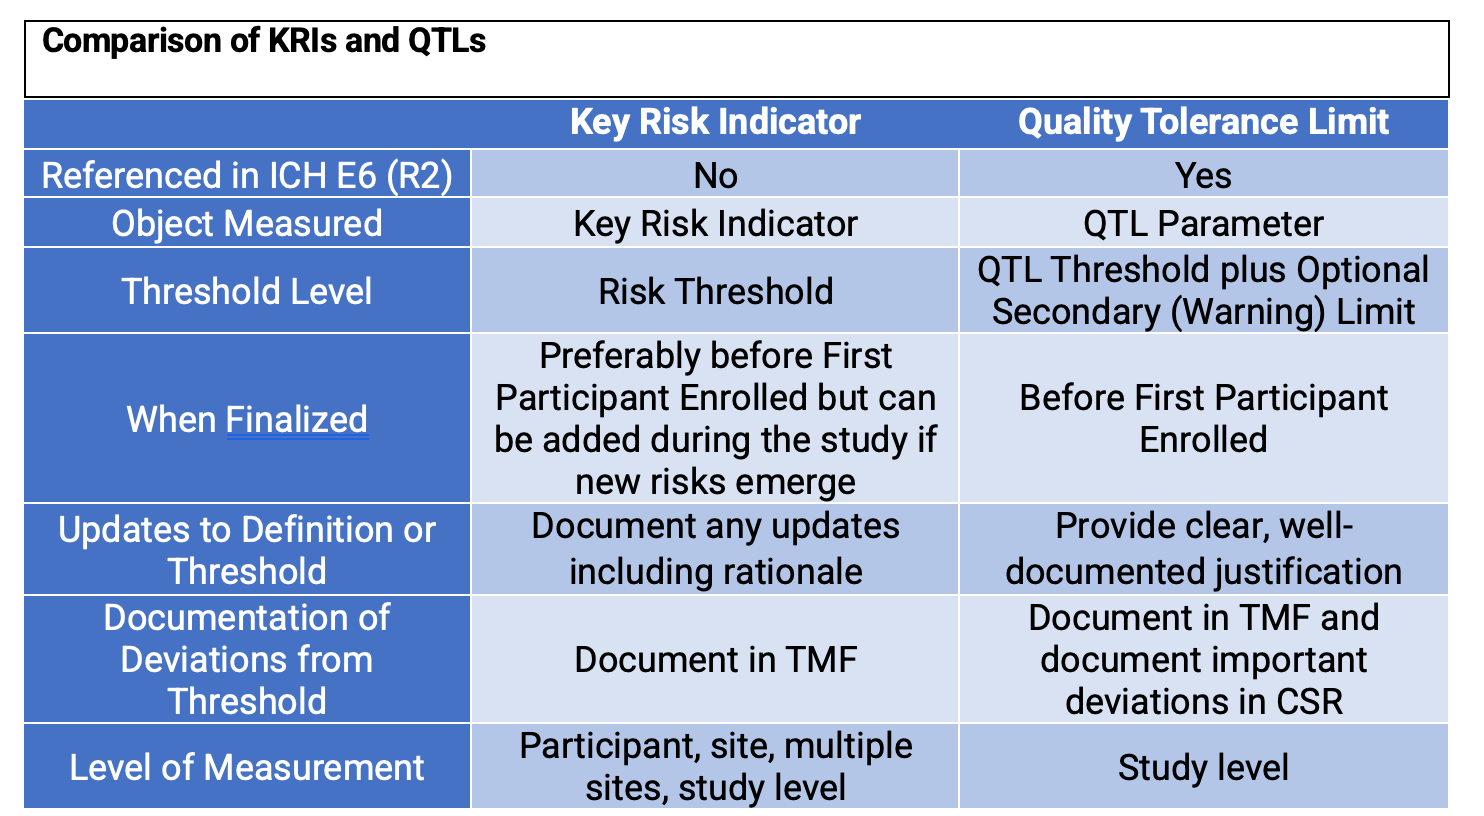 Table 1. Comparison of KRIs and QTLs